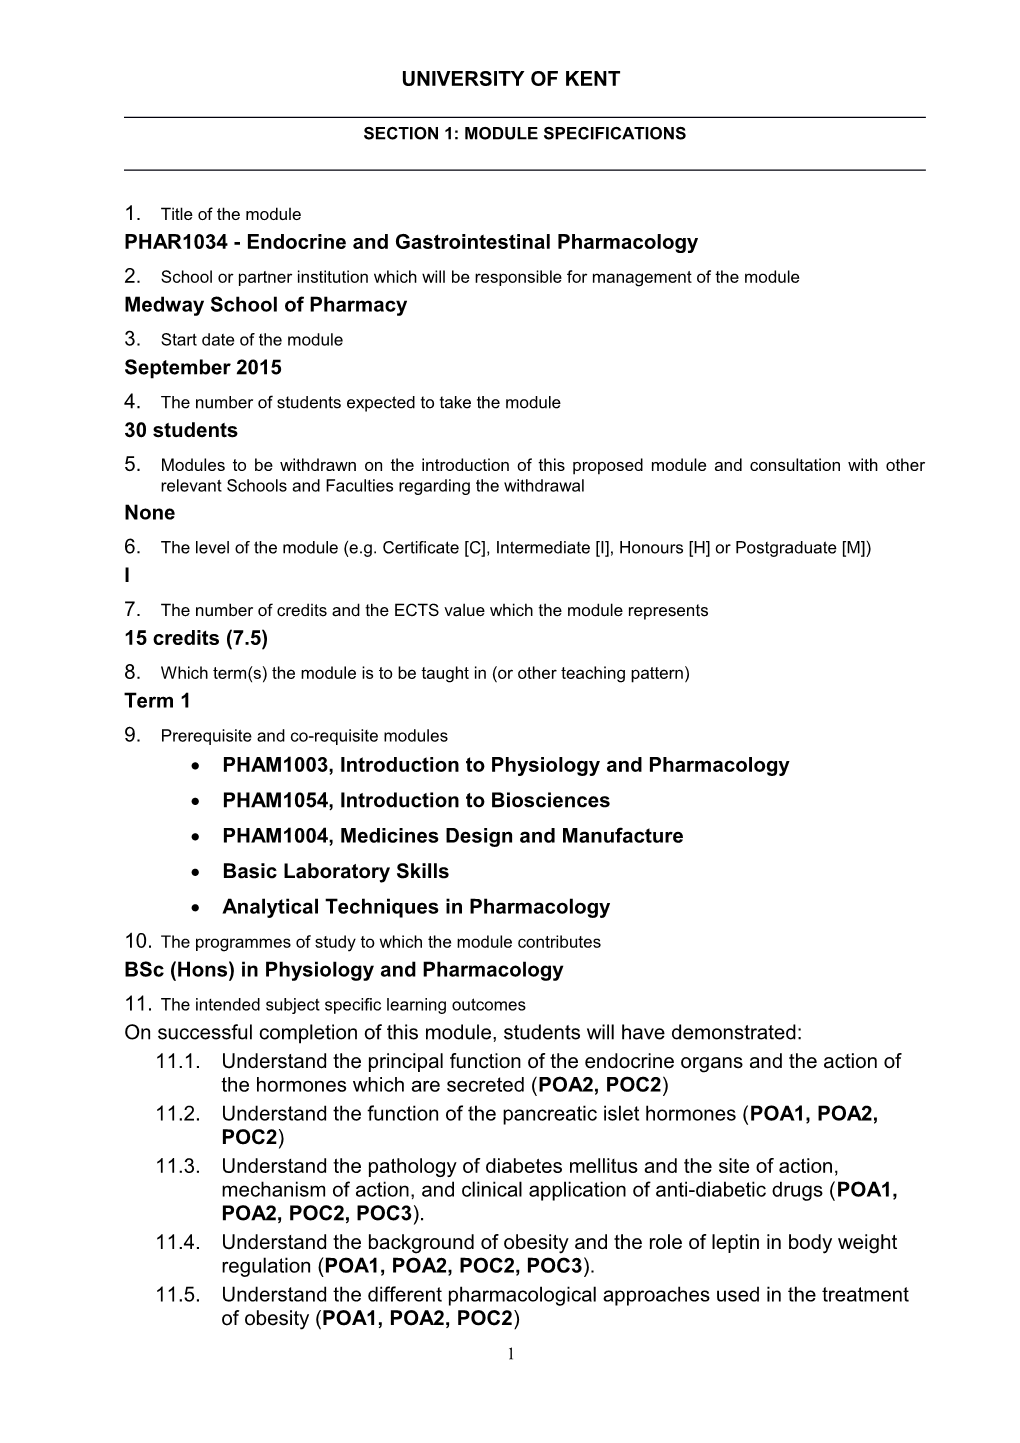 PHAR1034 - Endocrine and Gastrointestinal Pharmacology